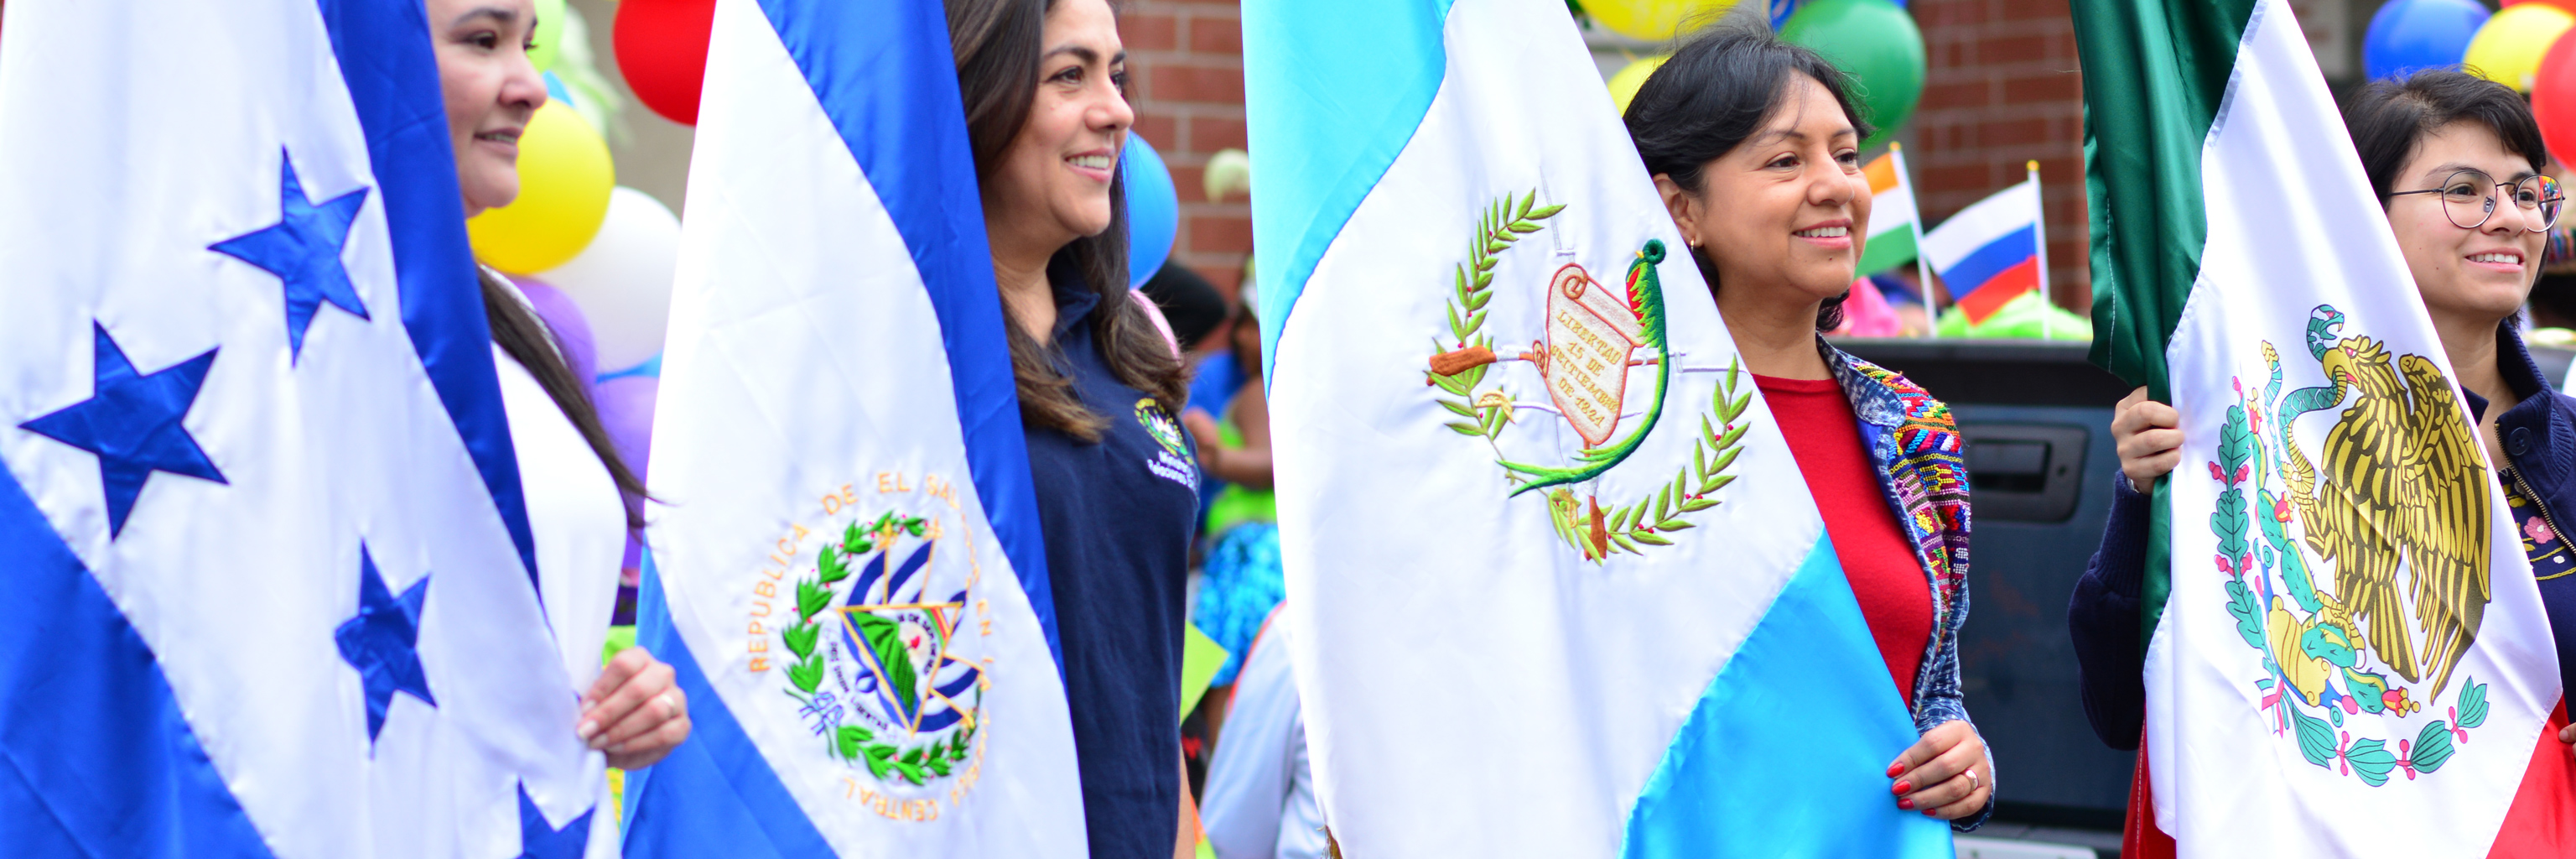 Women with flags preparing for a fiestas patrias parade.